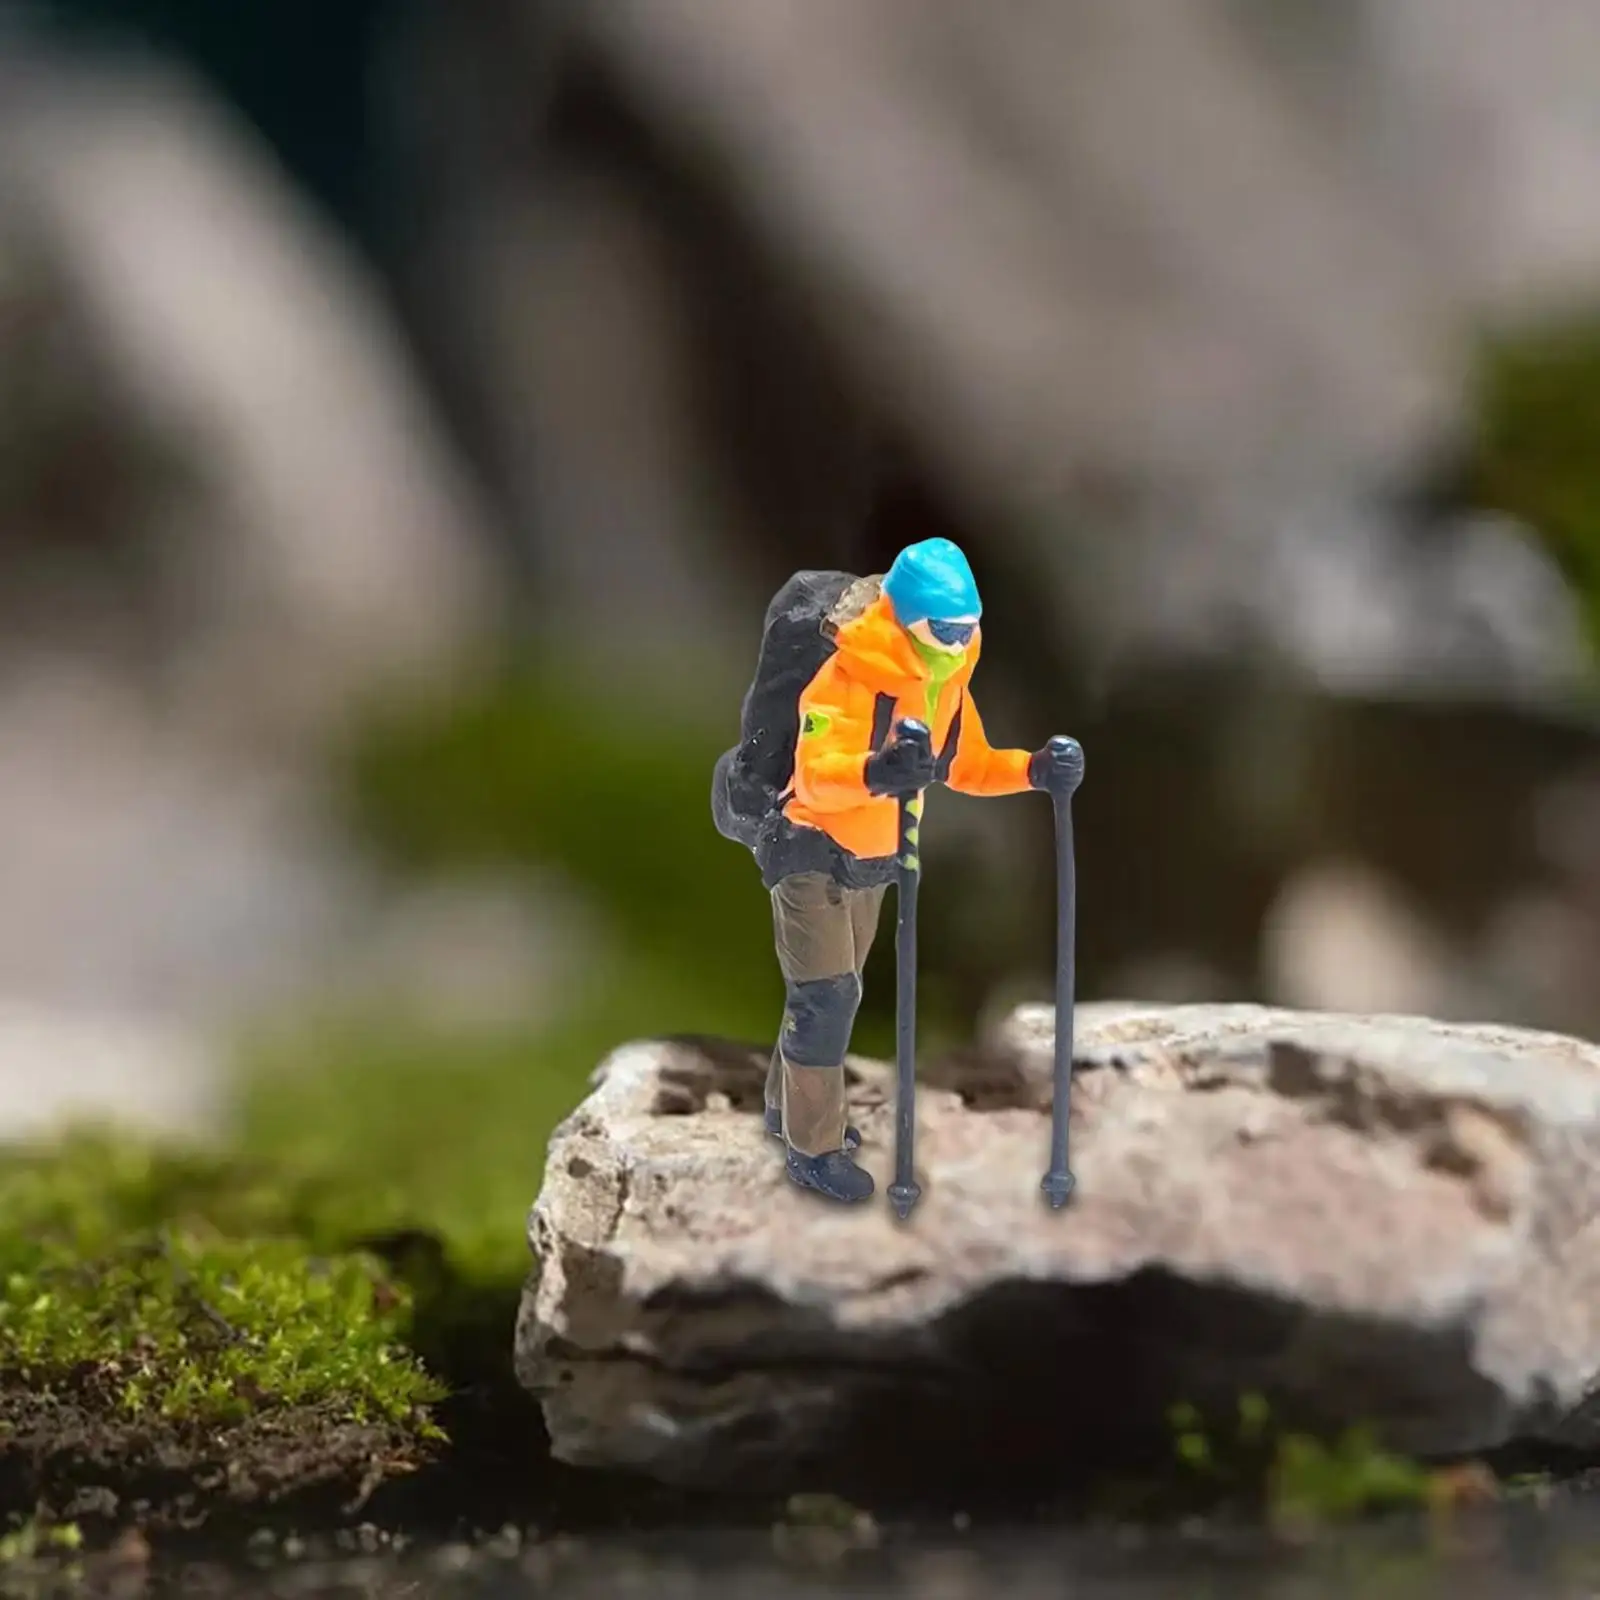 1/87 Climbing People Figurines Ornament Miniature People Model for DIY Scene Layout